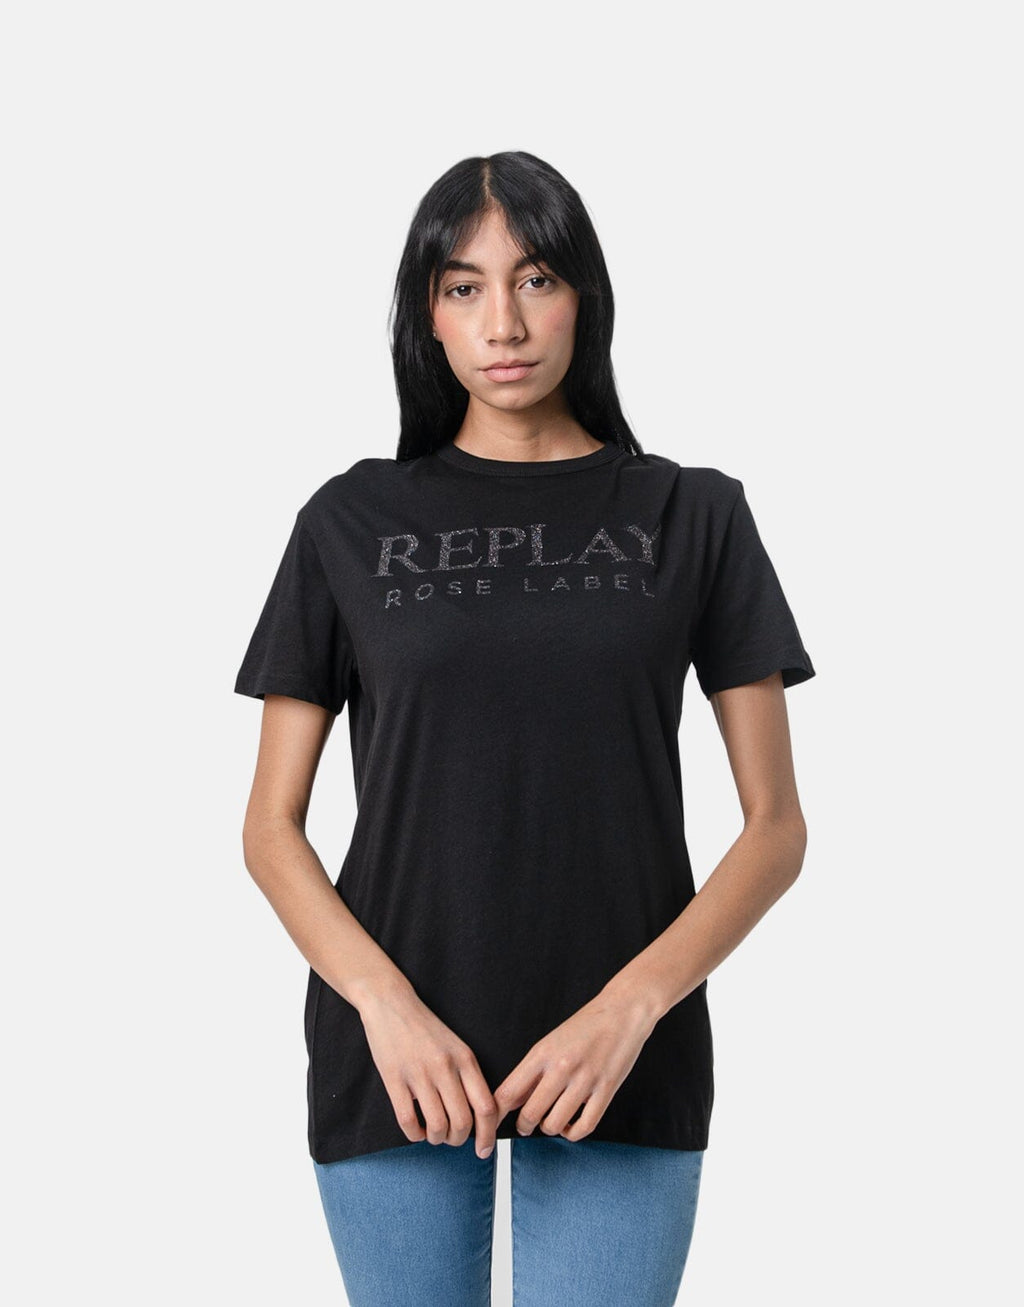 T-Shirt Replay Rose Label Black